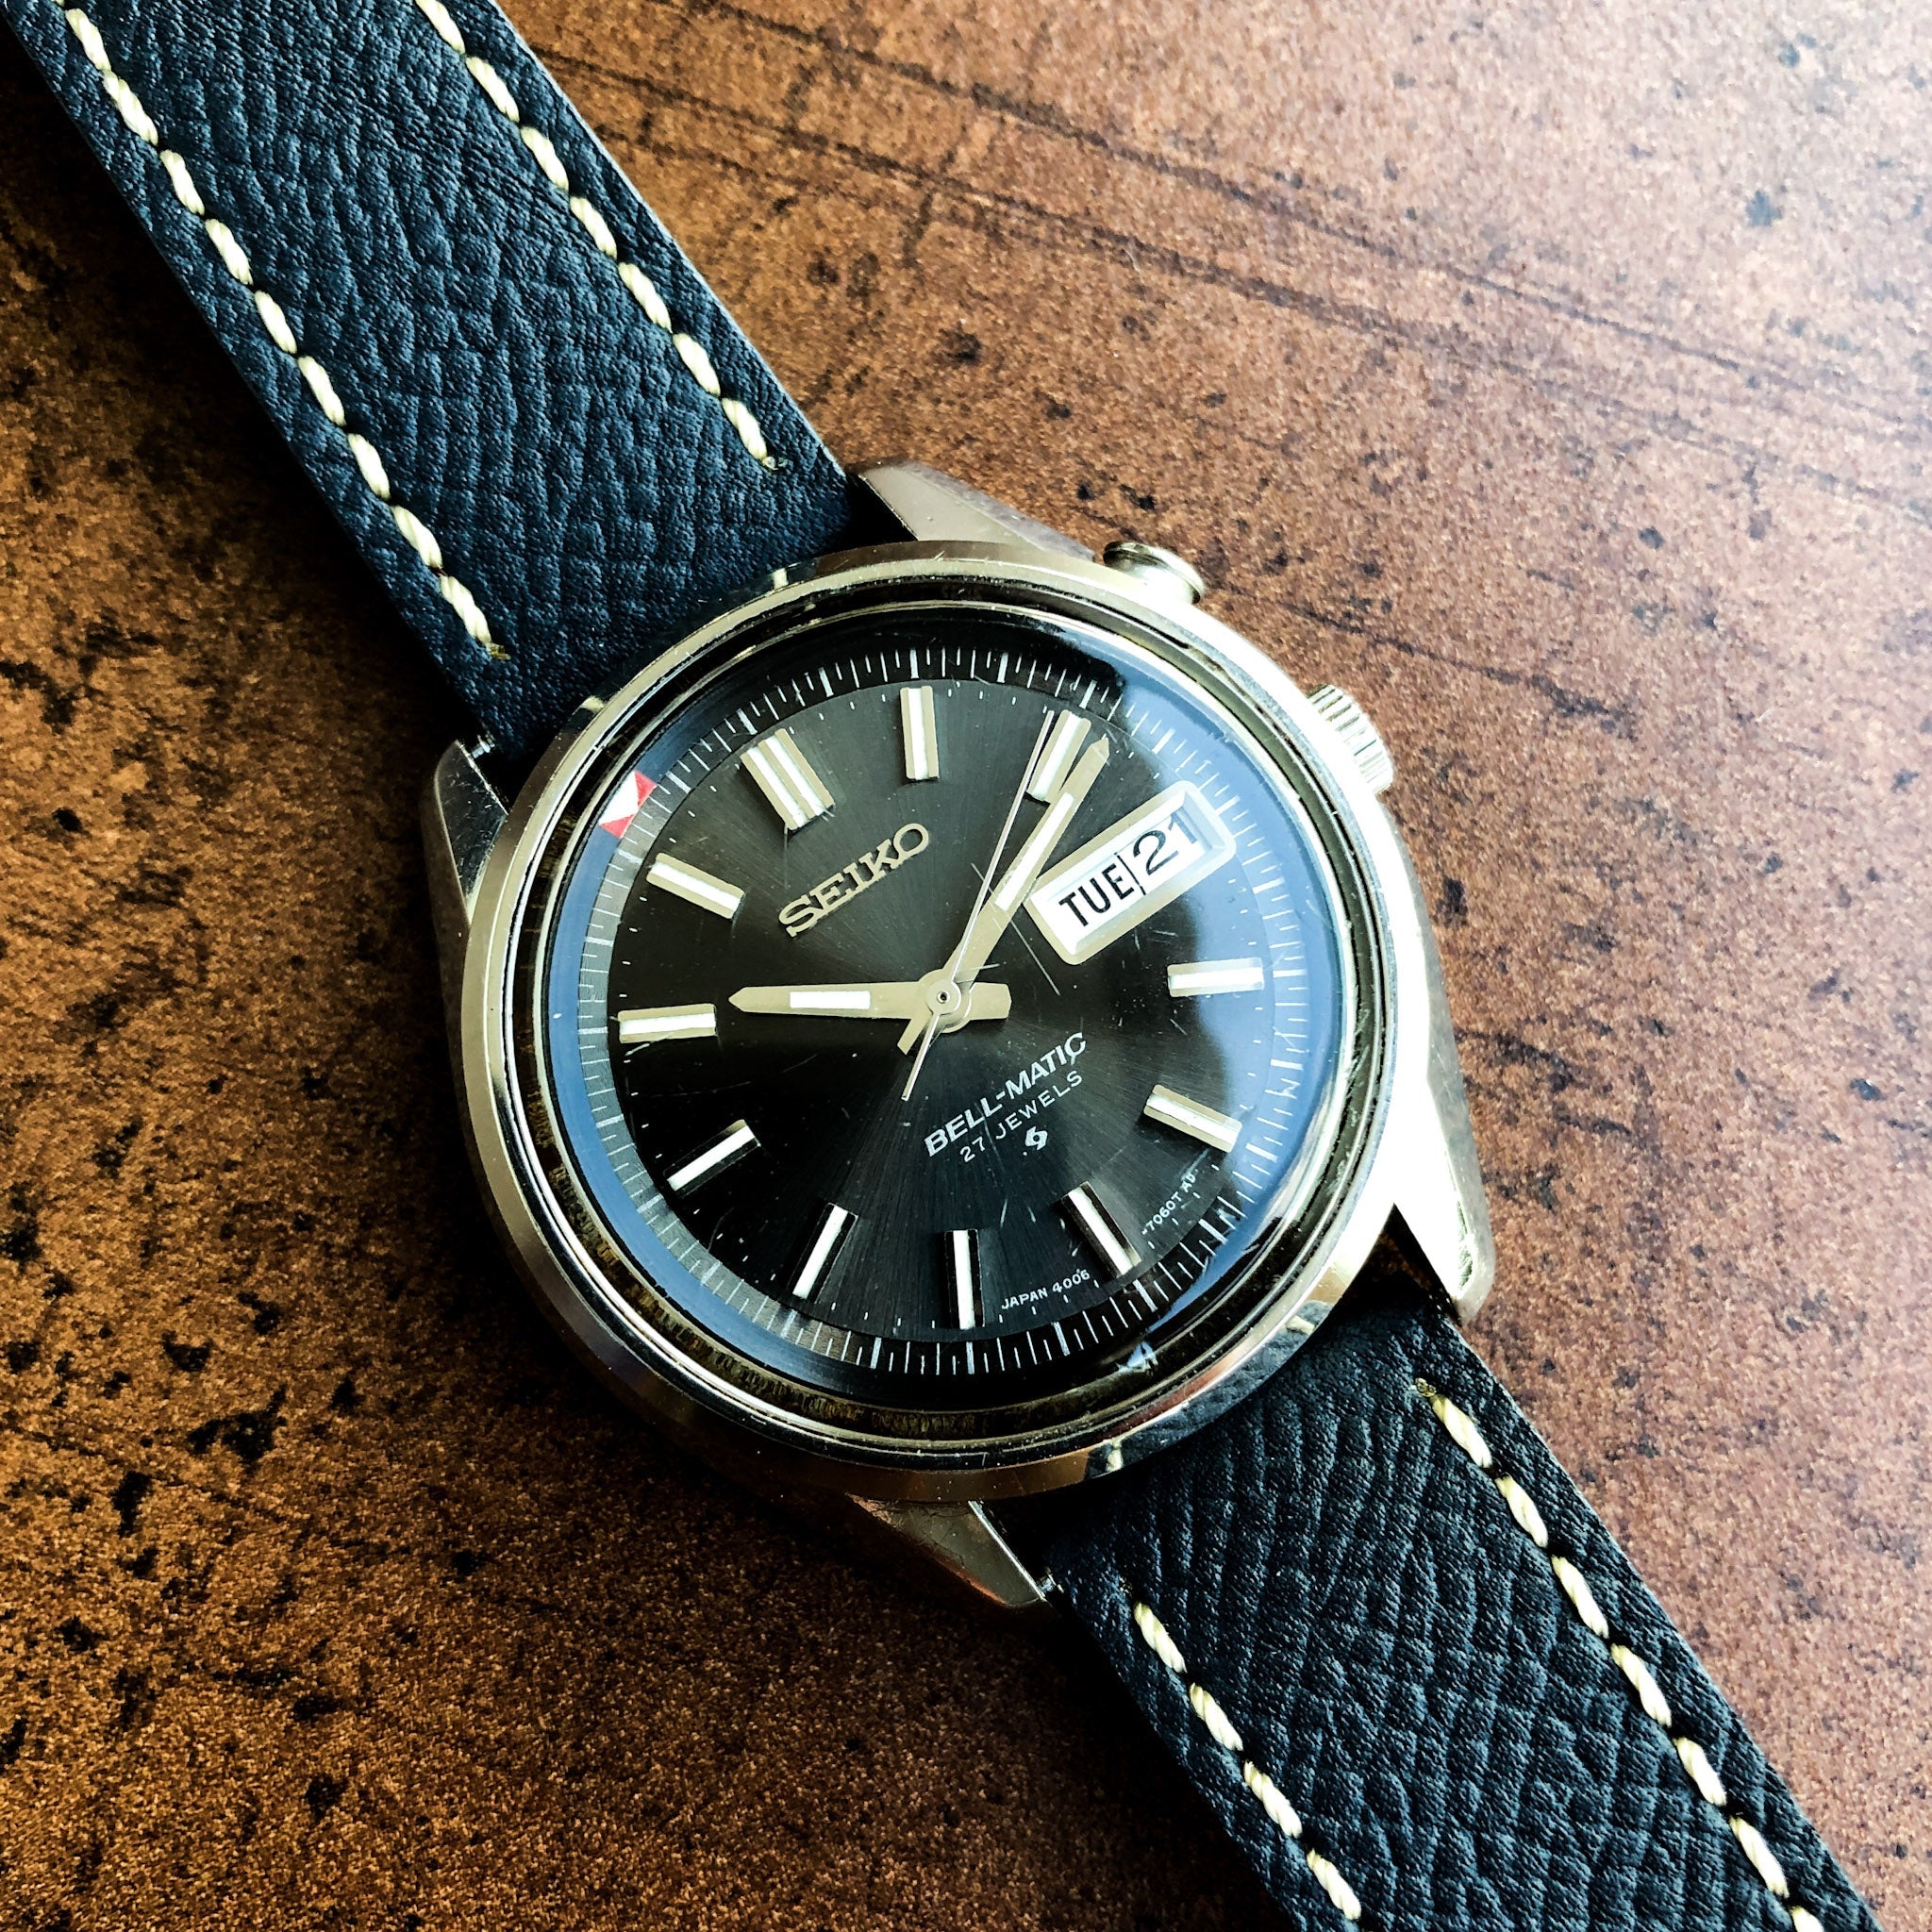 Vintage Watch | BELL-MATIC SEIKO 4006-7012 - Samurai Vintage Co.